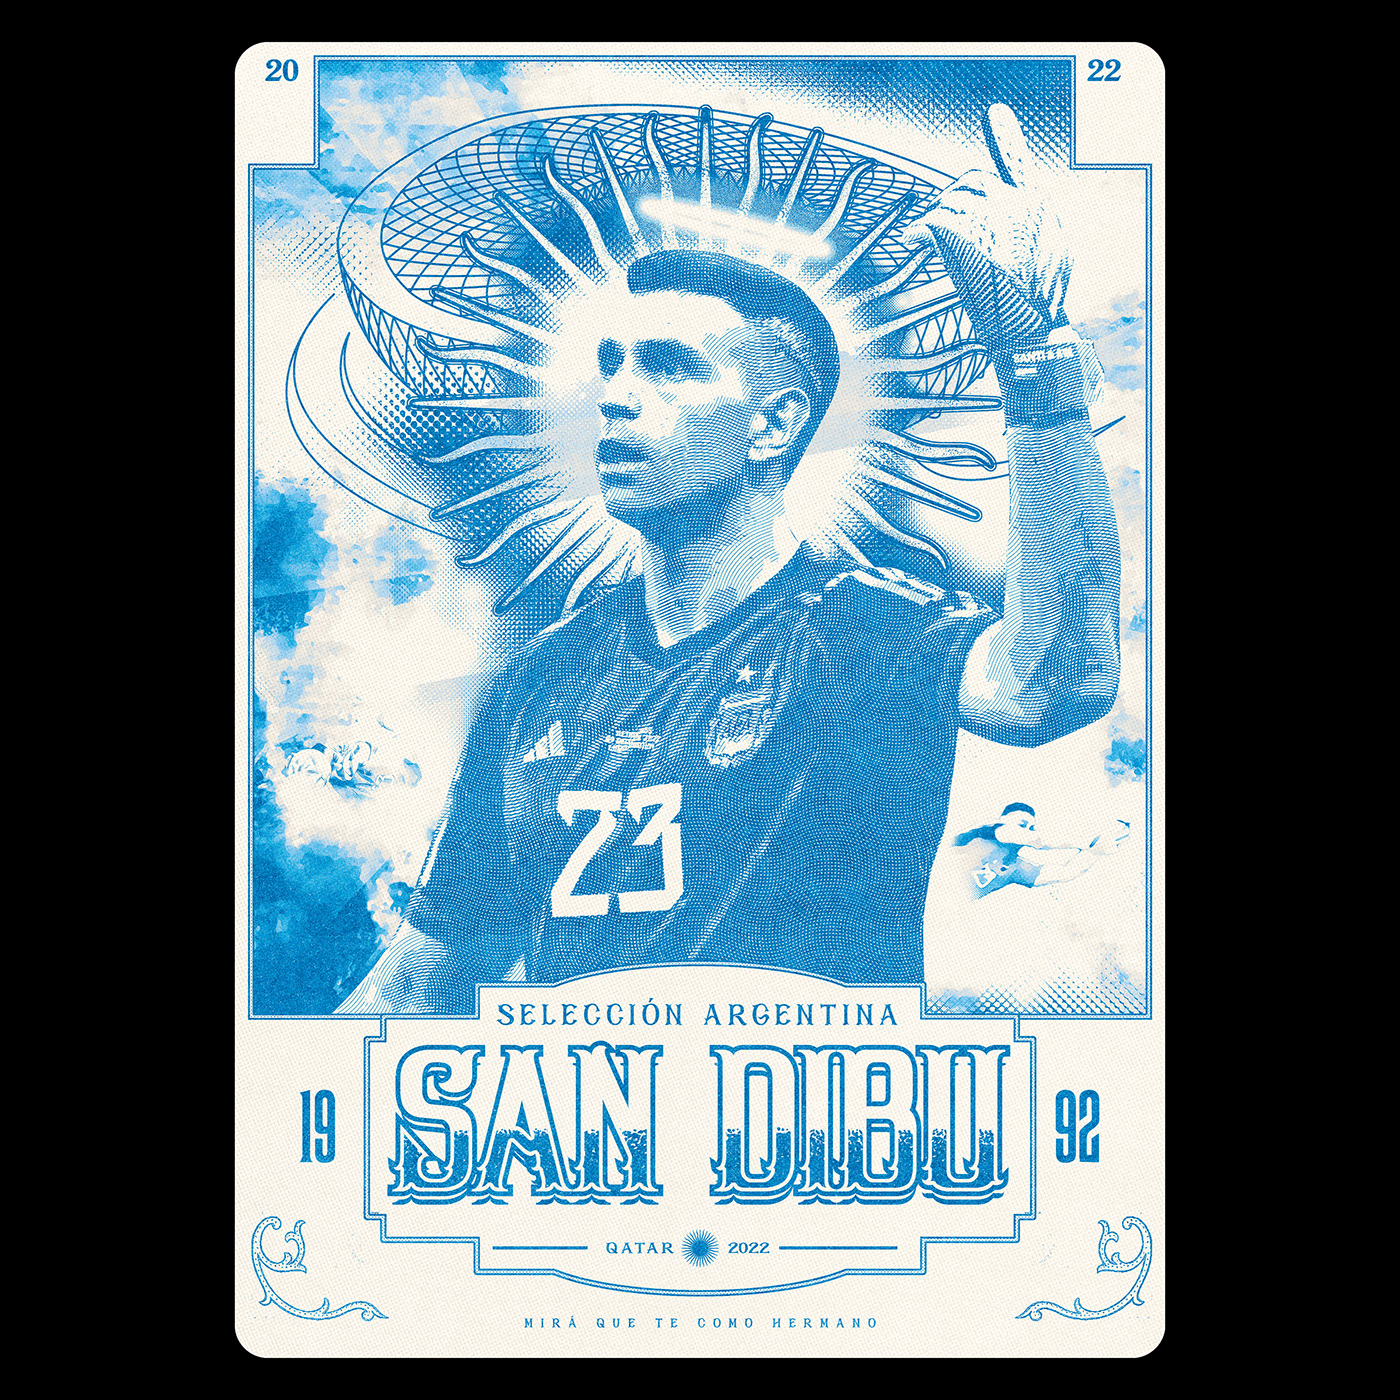 Argentina football messi futbol argentino Poster Design PosterArt photoshop design football design Sports Design sports SCALONI